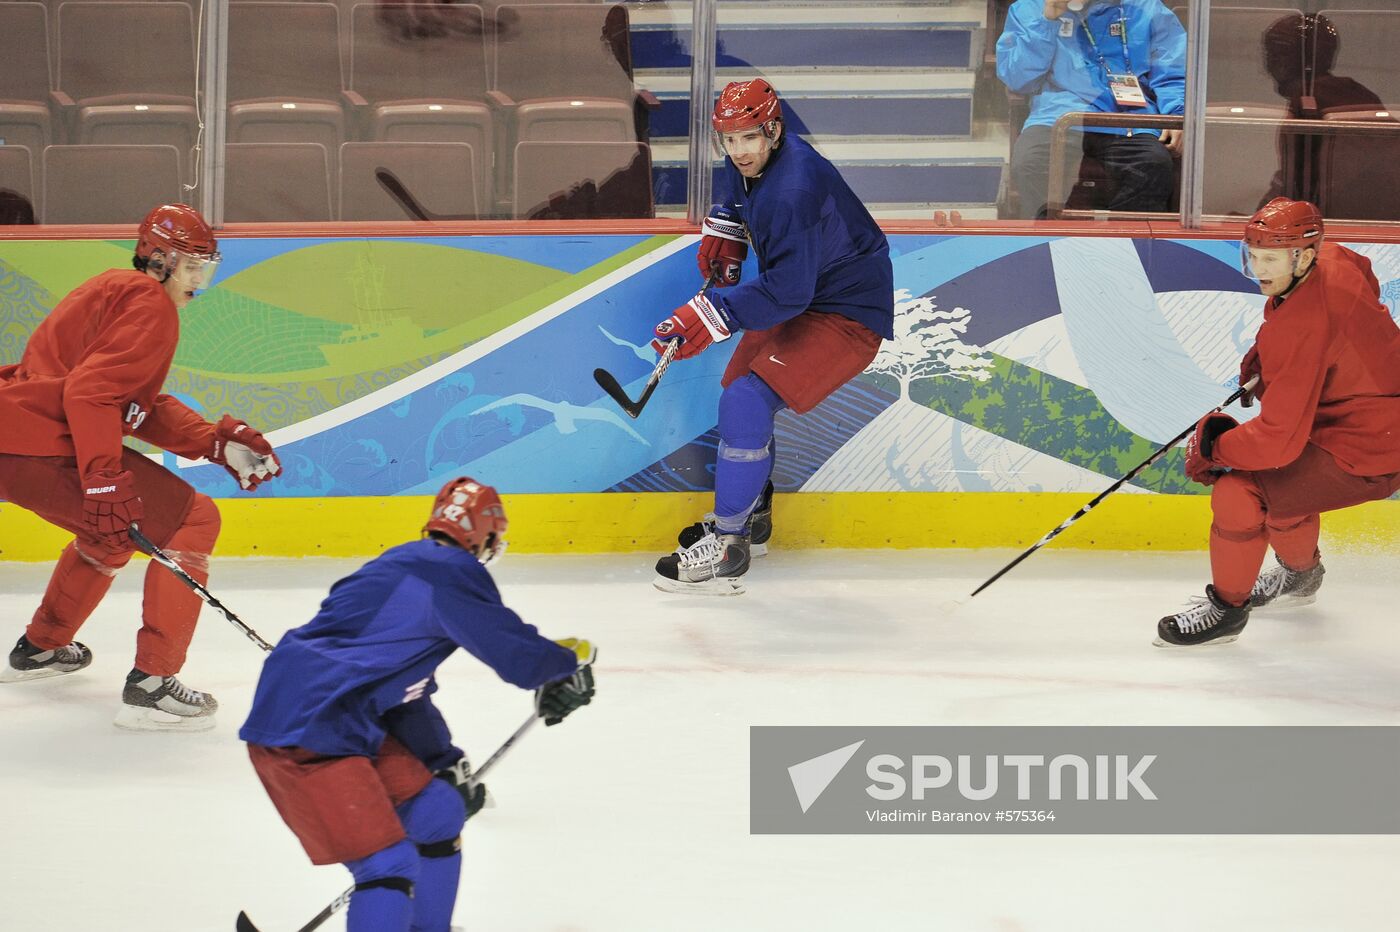 Russian hockey team's training session